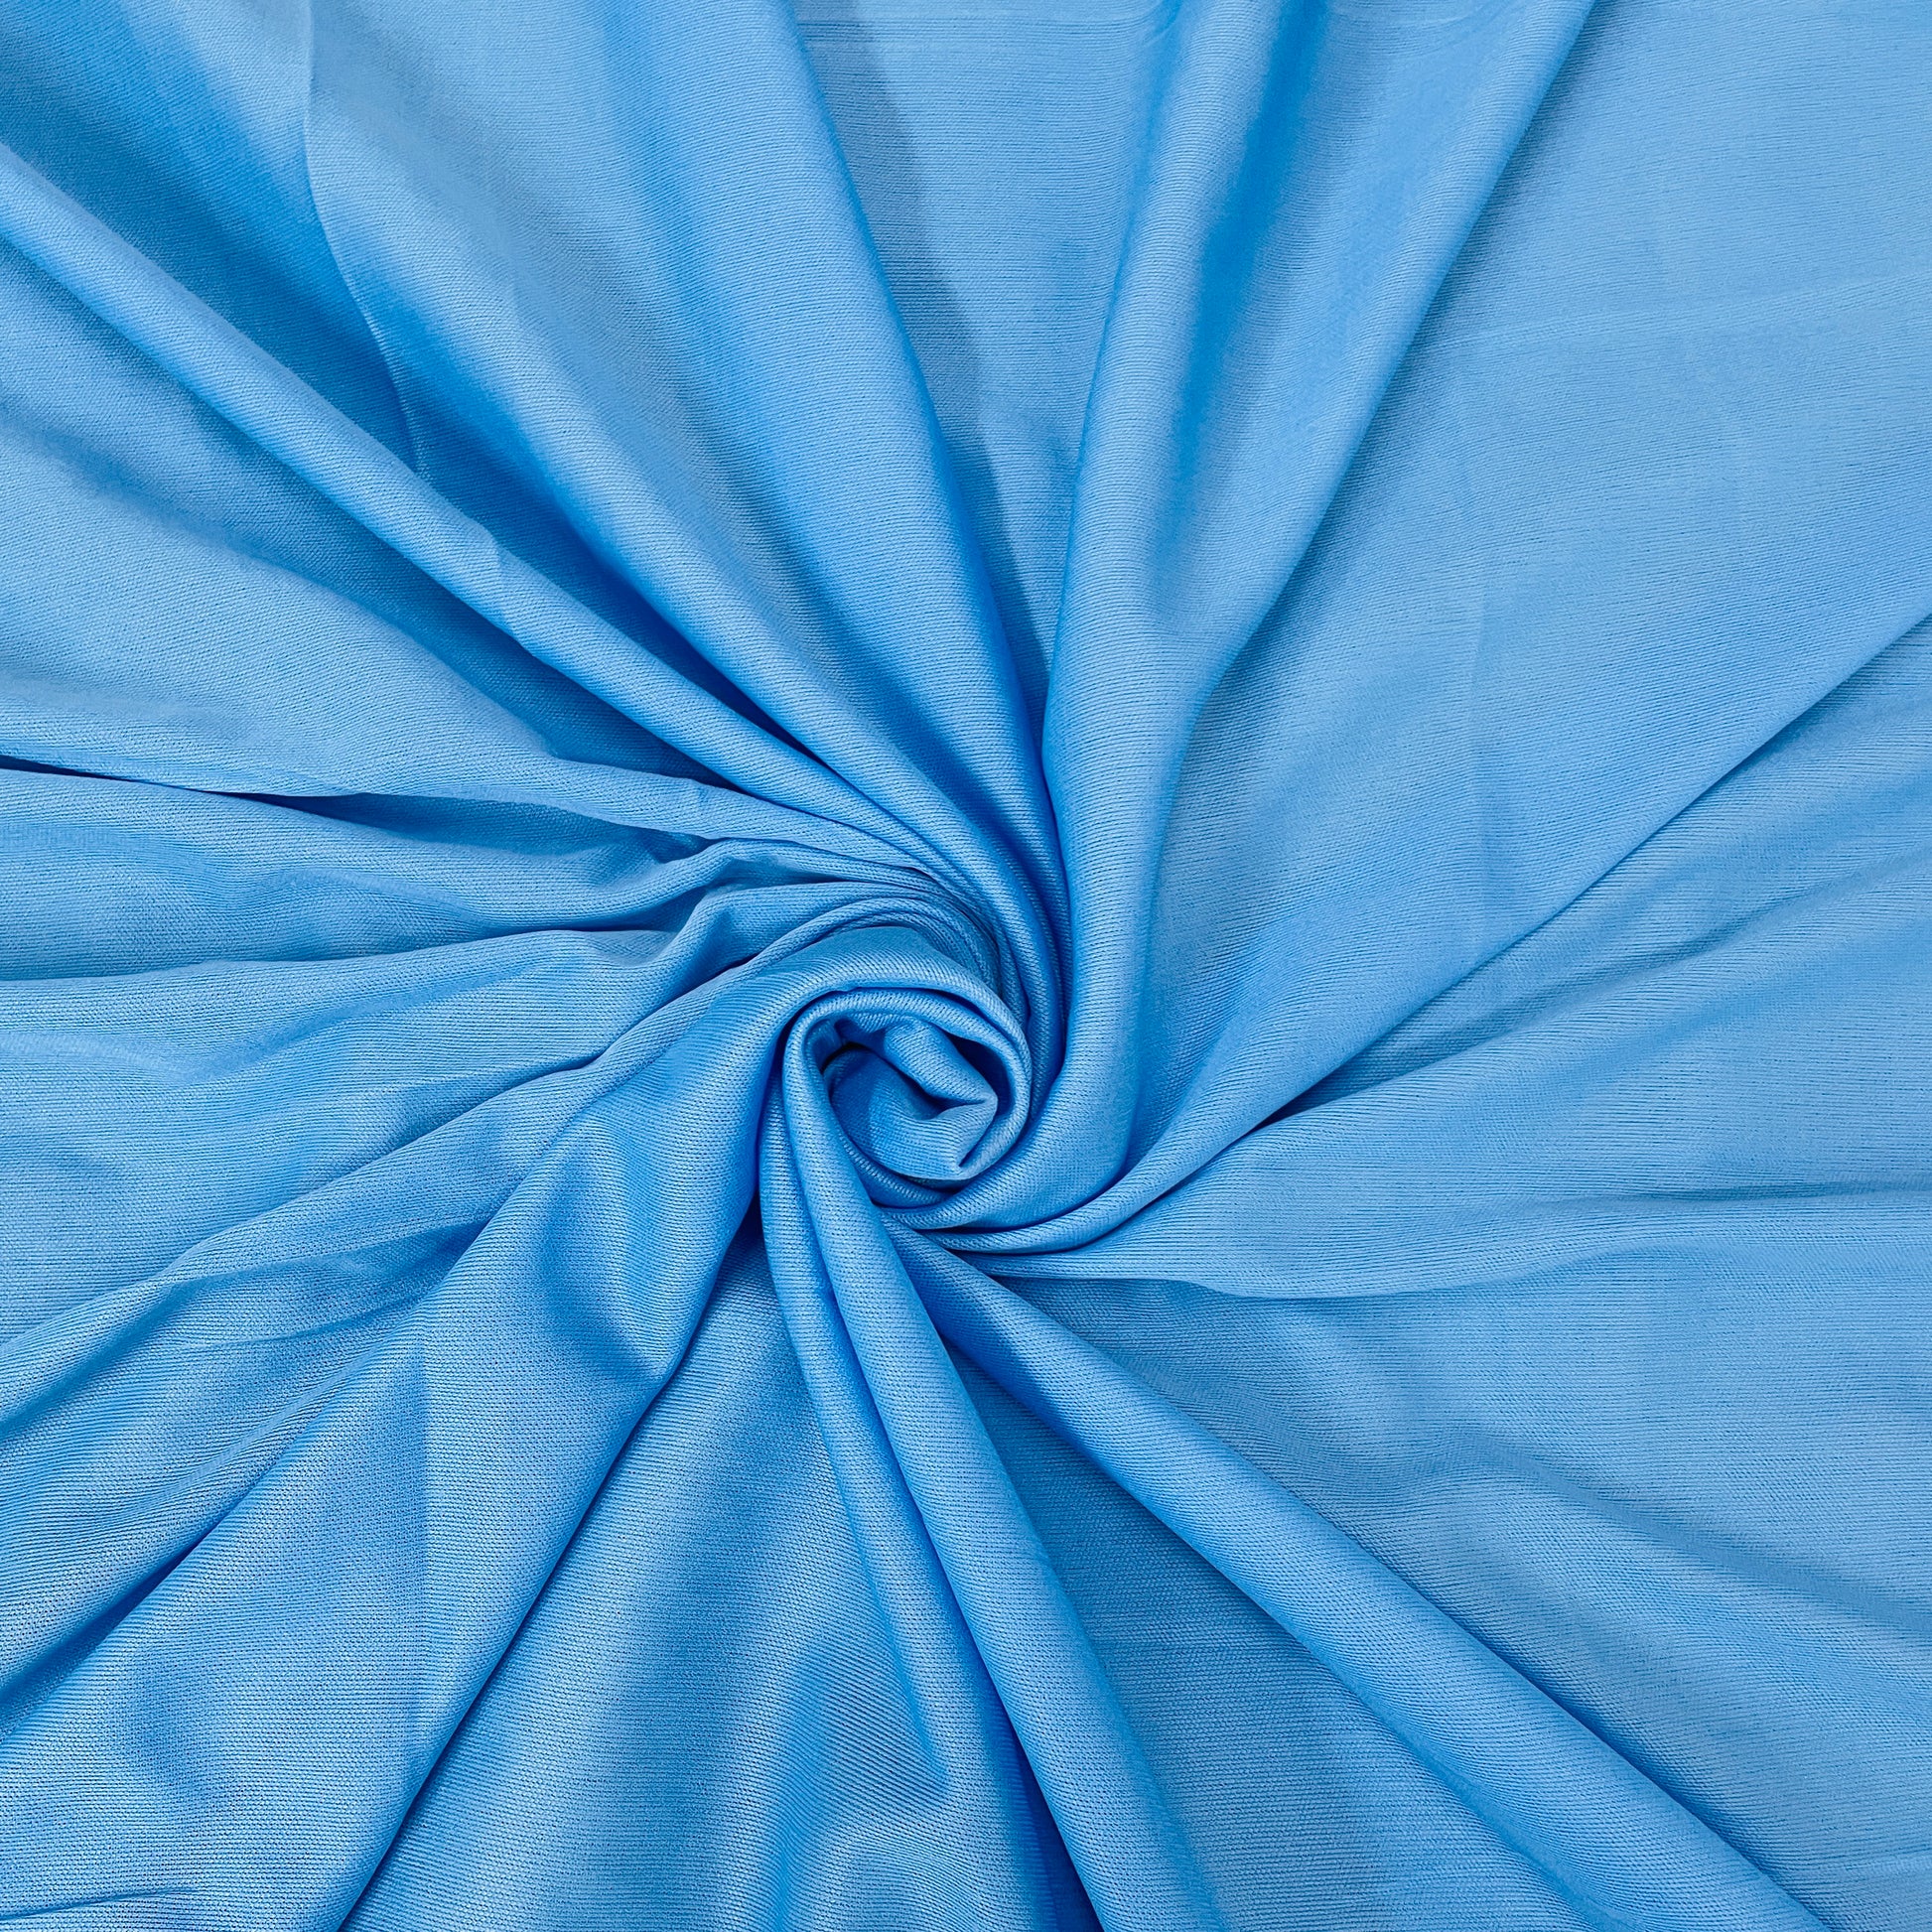 Lycra in Carolina Blue - All About Fabrics